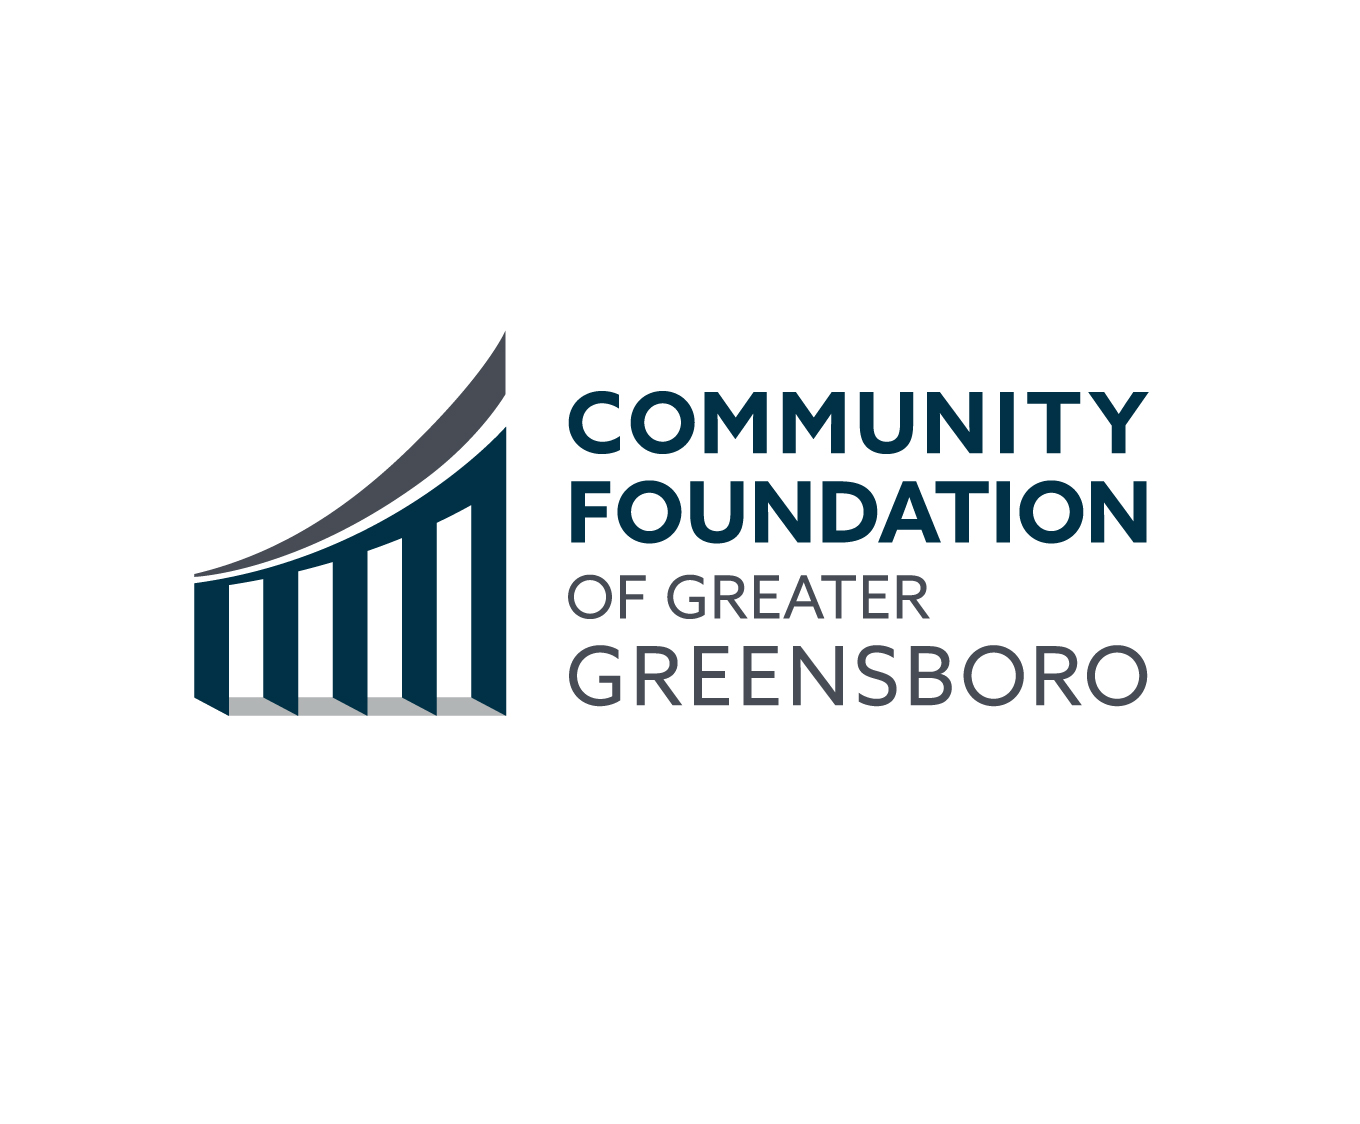 Community Foundation of Greater Greensboro Logo Design - Rebranding